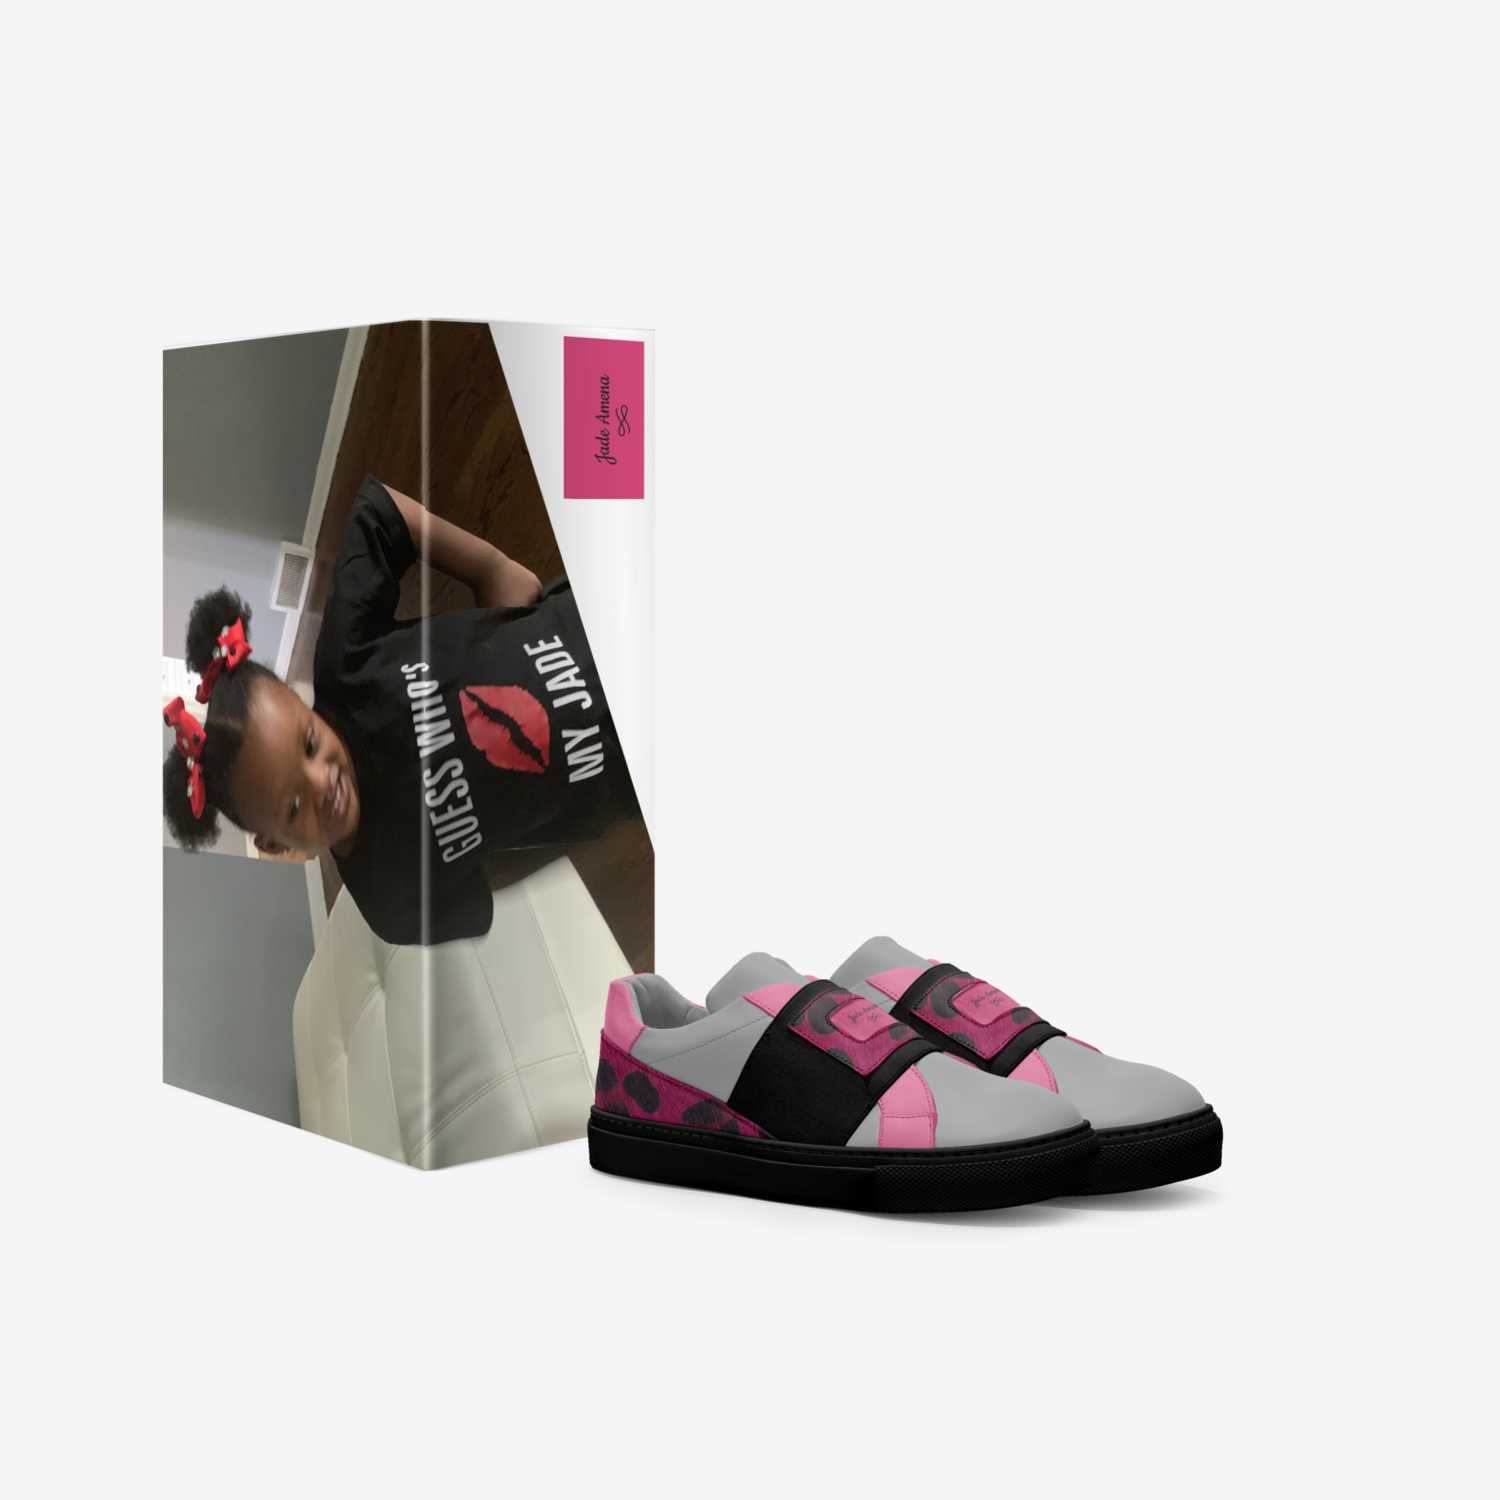 Jade Amena custom made in Italy shoes by Catrina Brown | Box view